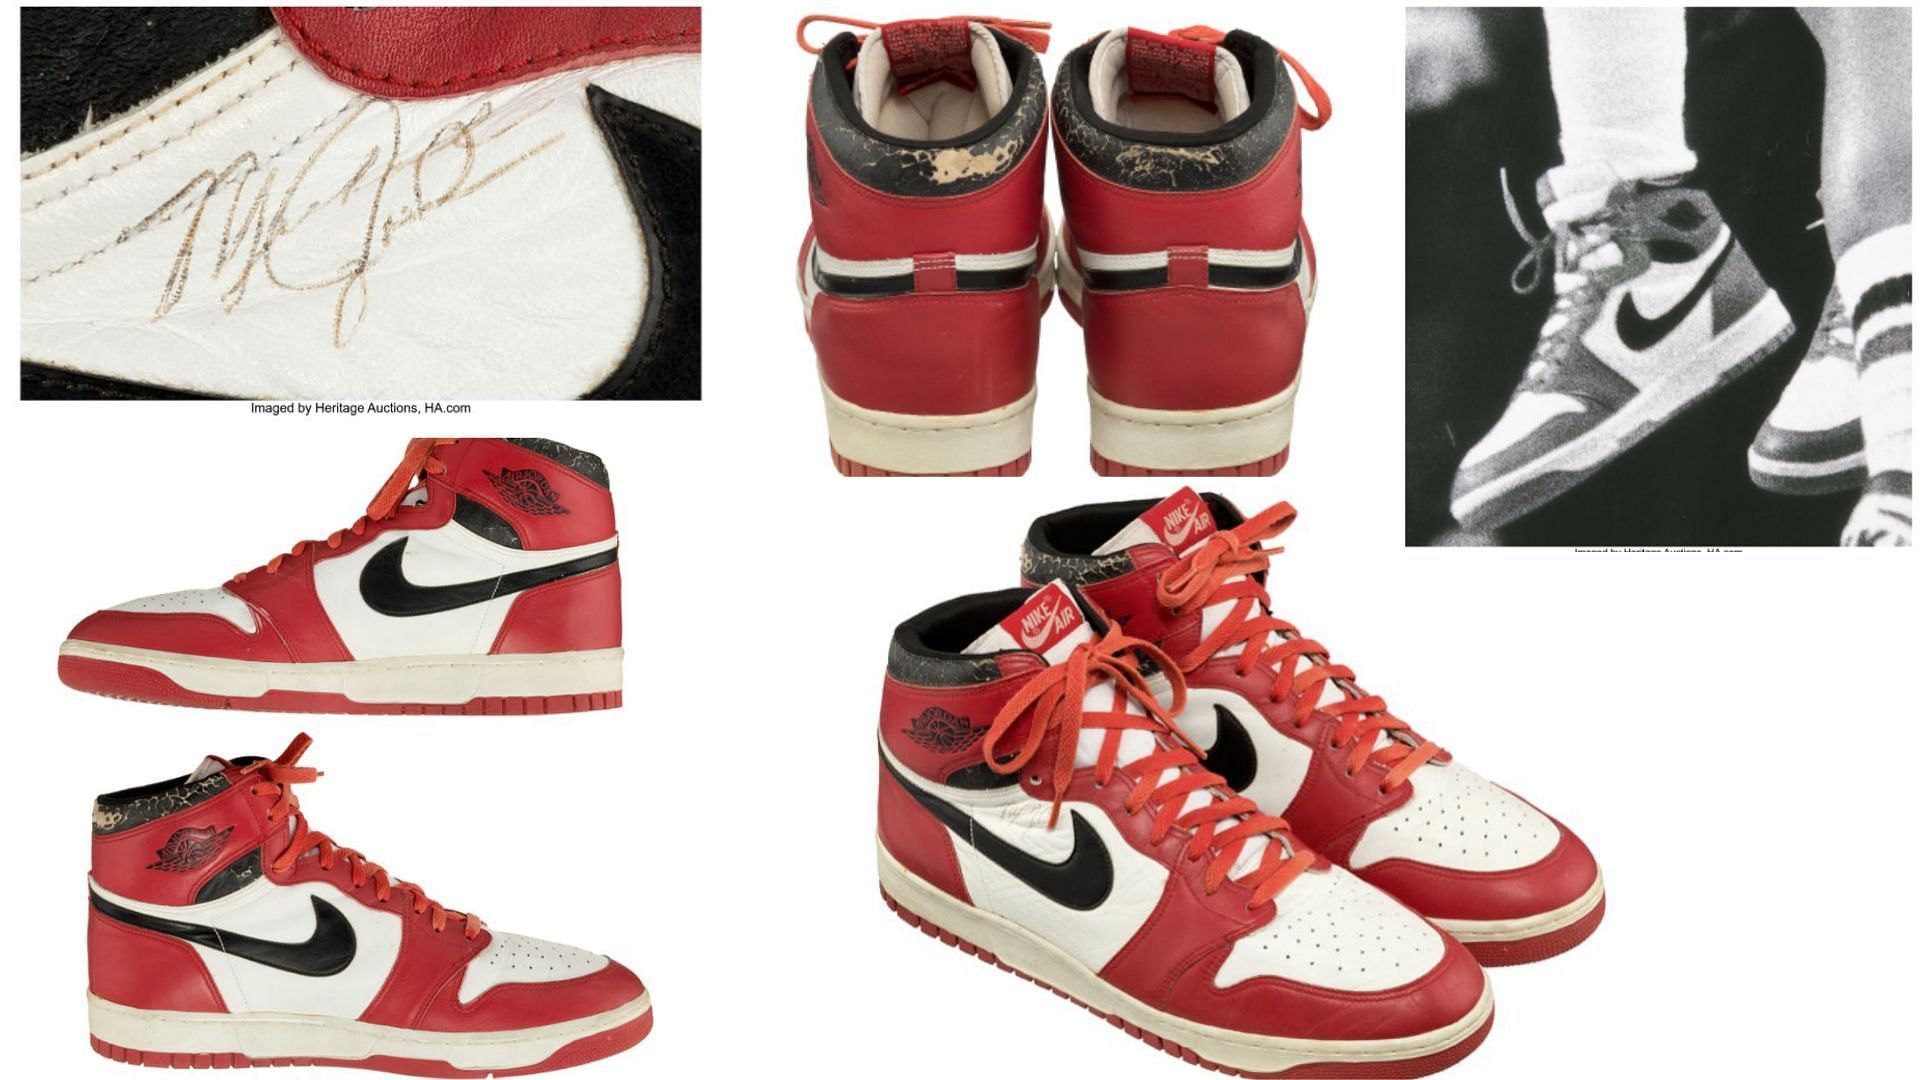 Michael Jordan 1986 game-worn custom-made Nike Air Jordan 1 are being auctioned (Image via Heritage Auctions)